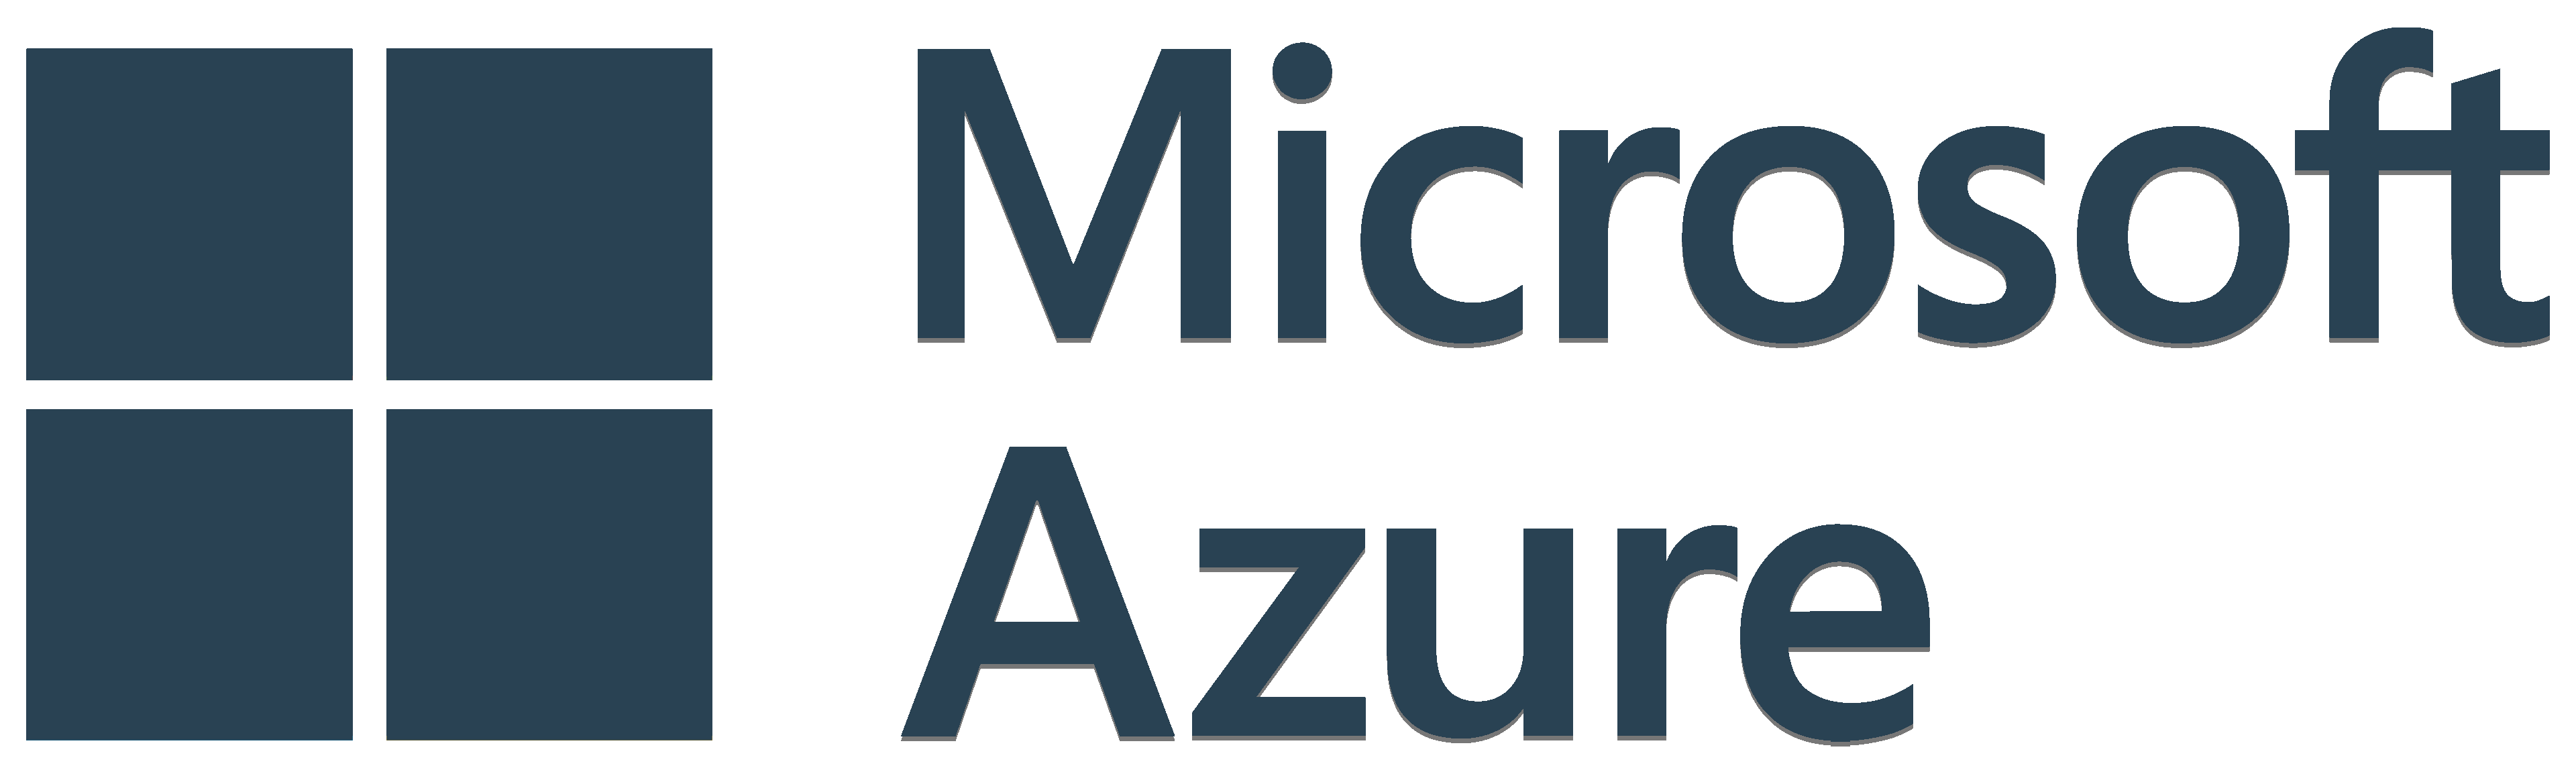 Microsoft-Azure-Logo2